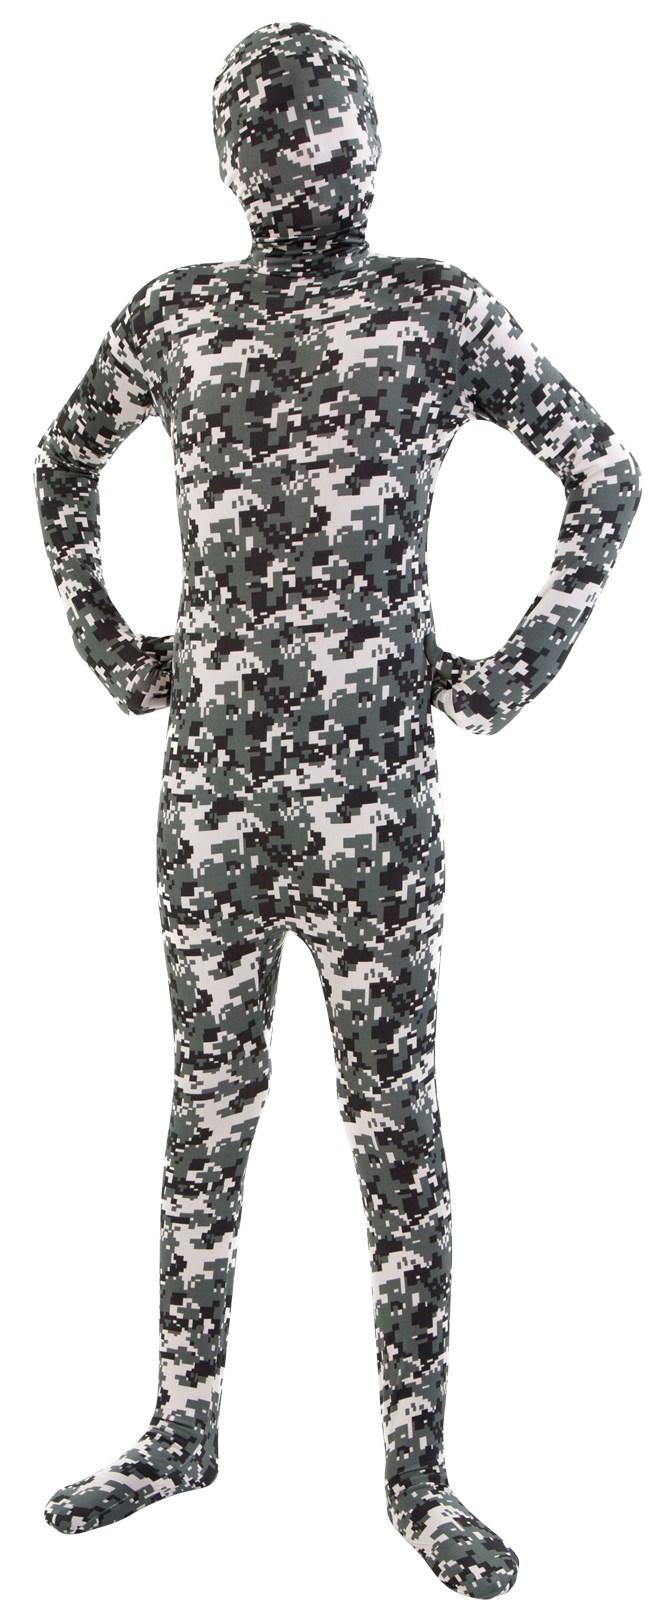 Camo Skin Suit Costume for Children